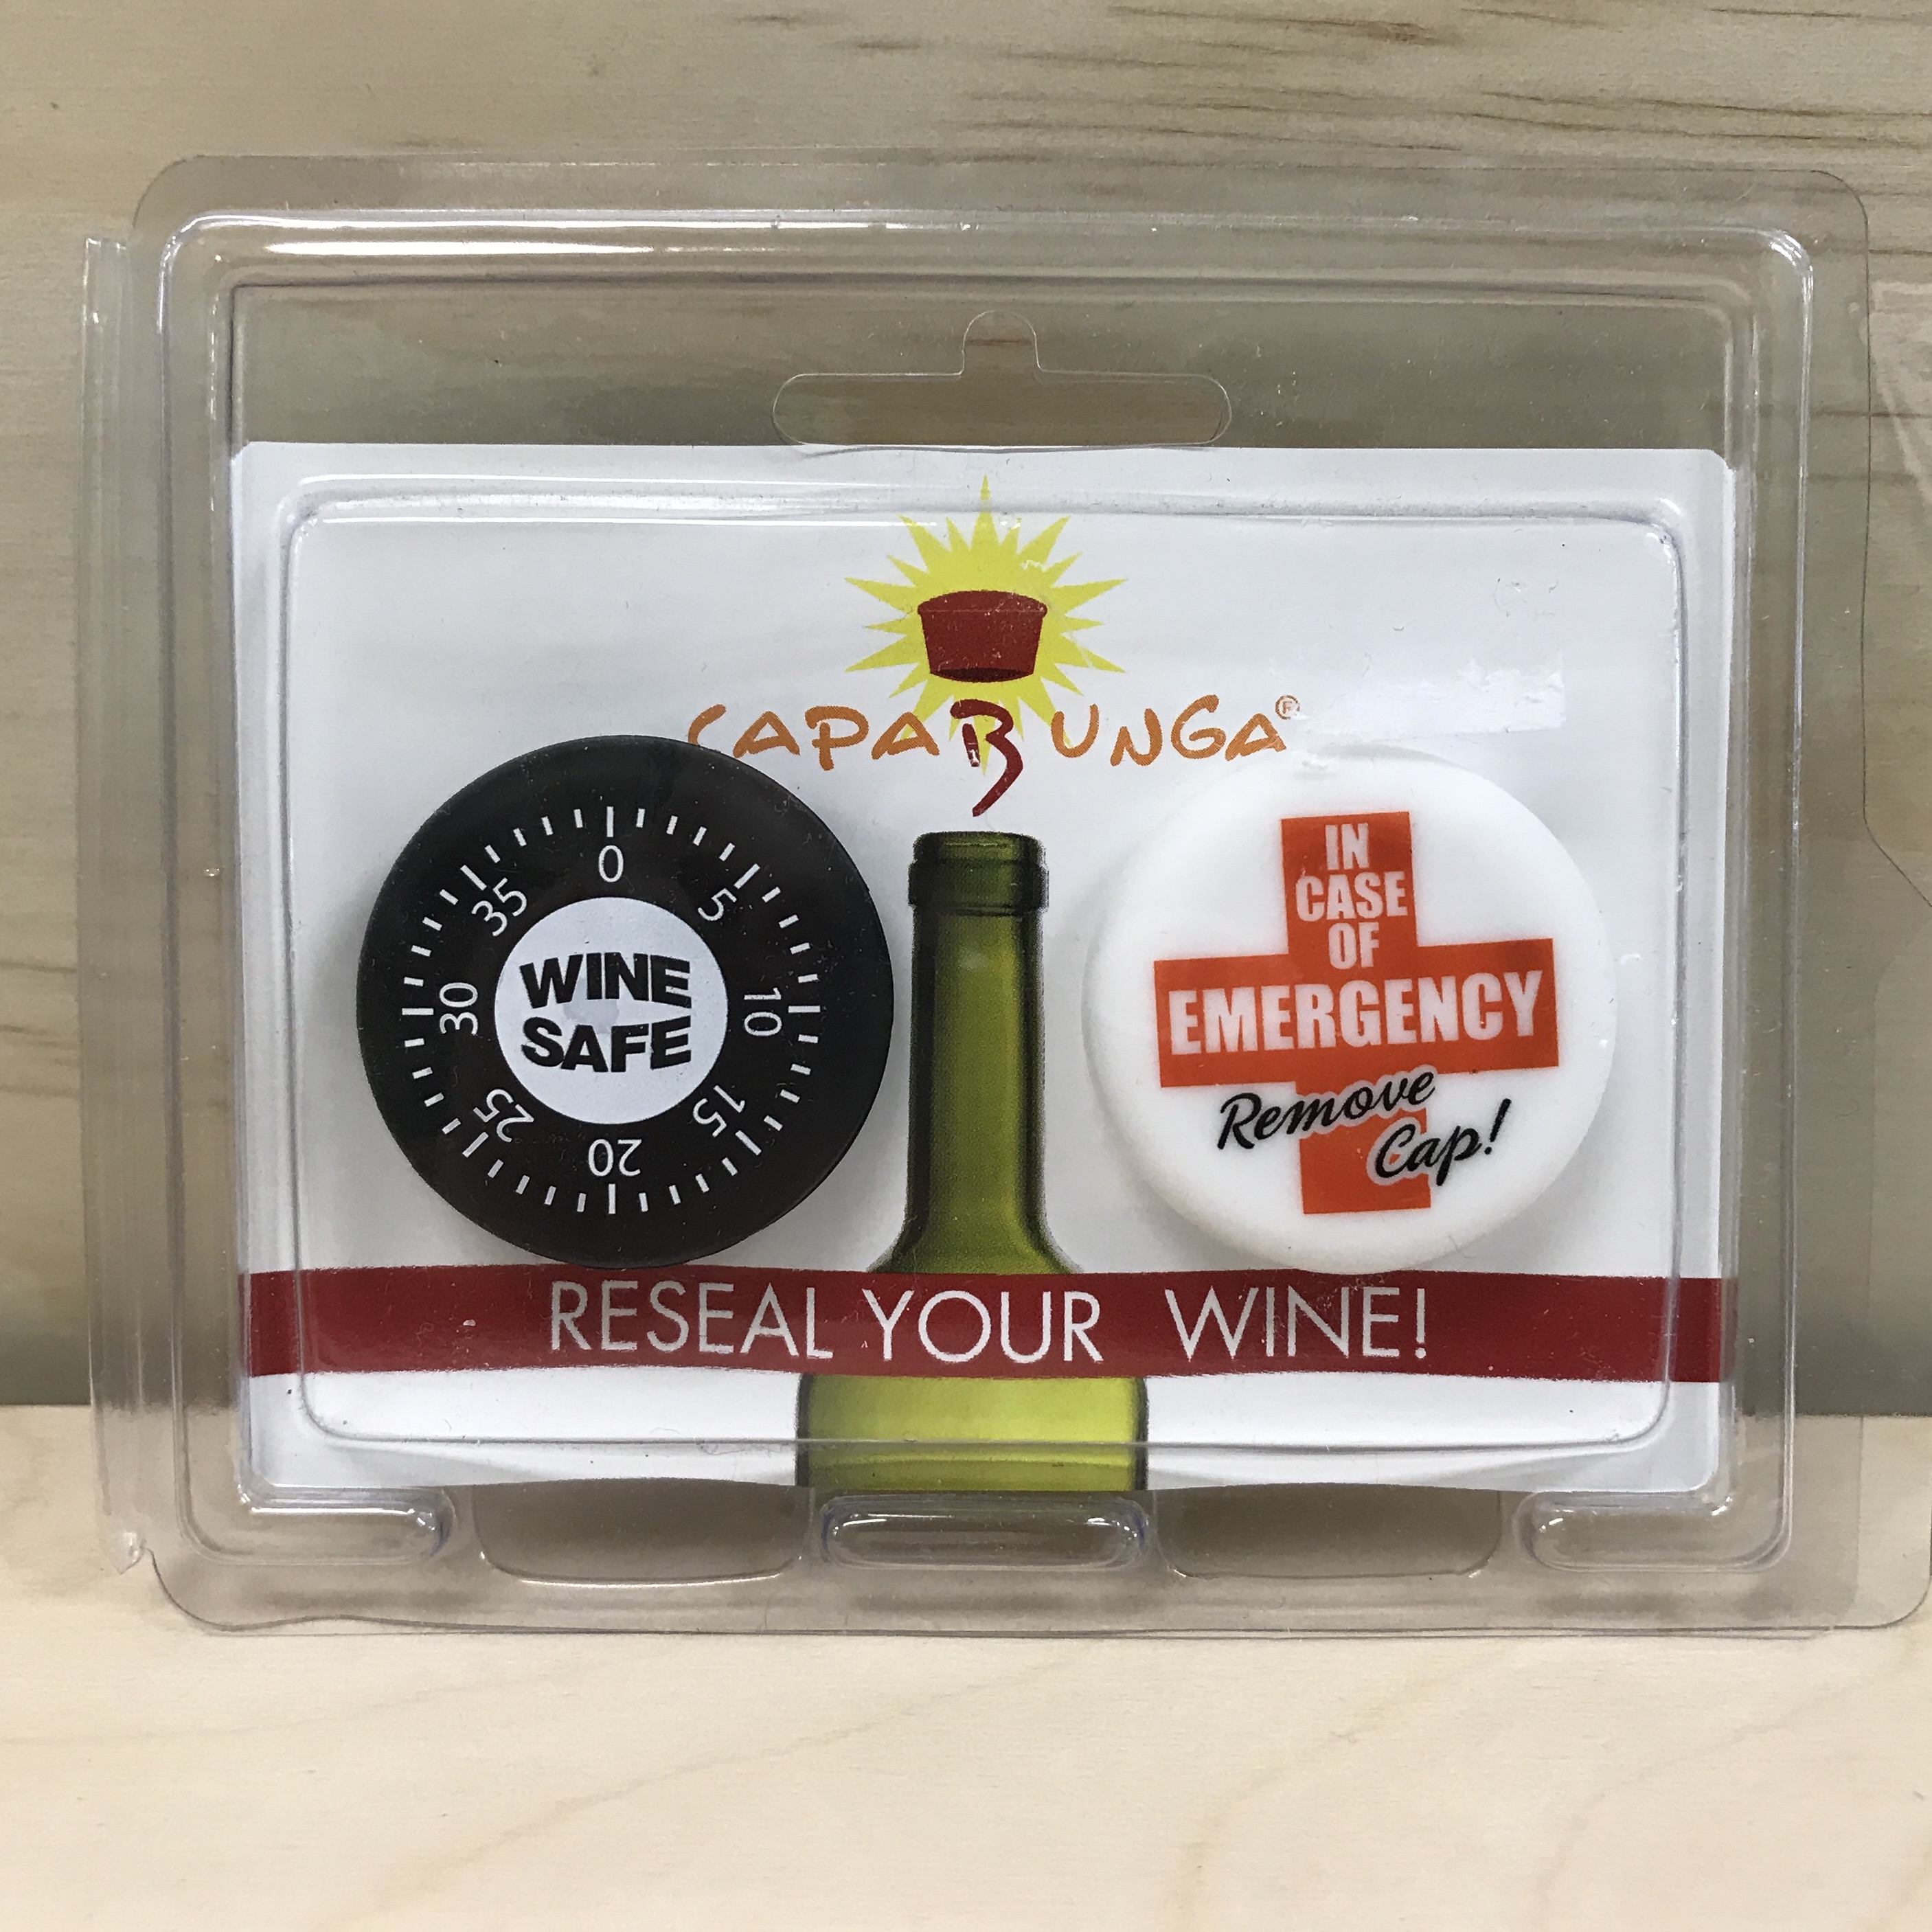 CapaBunga - The Reusable Cap for a Wine Bottle - Wine Safe & Eme